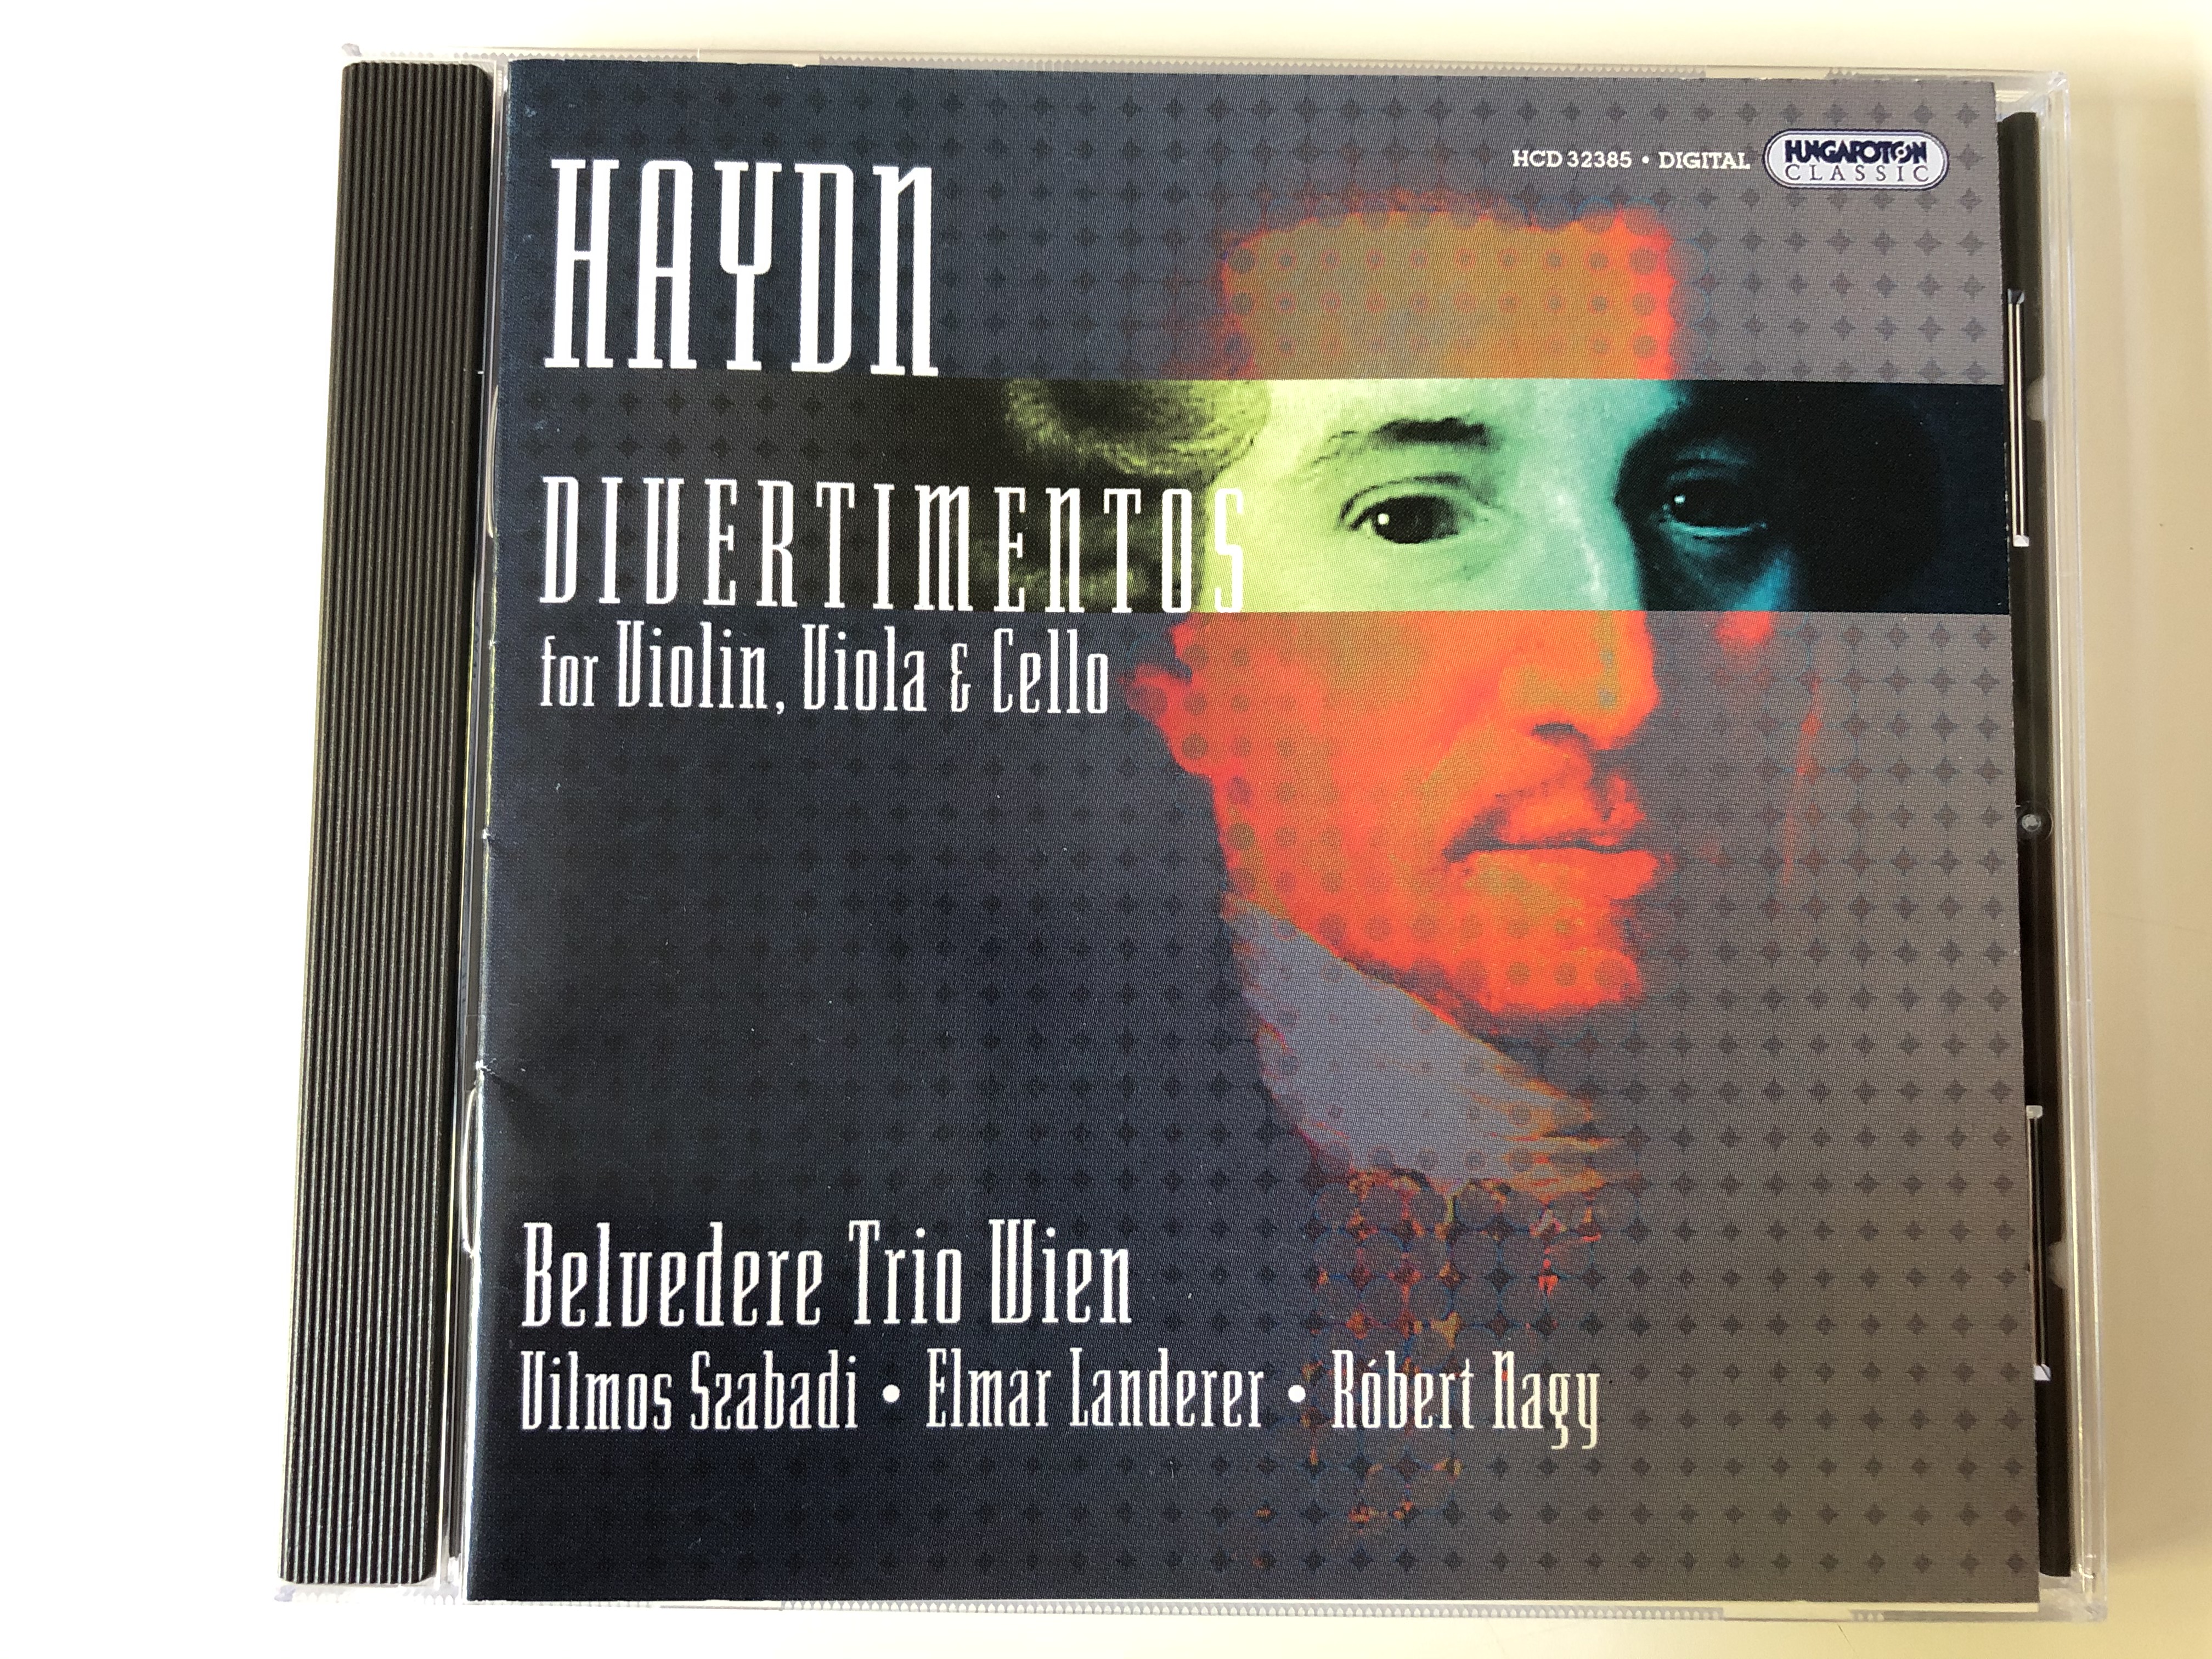 haydn-divertimentos-for-violin-viola-cello-belvedere-trio-wien-vilmos-szabadi-elmar-landerer-robert-nagy-hungaroton-classic-audio-cd-2005-stereo-hcd-32385-1-.jpg